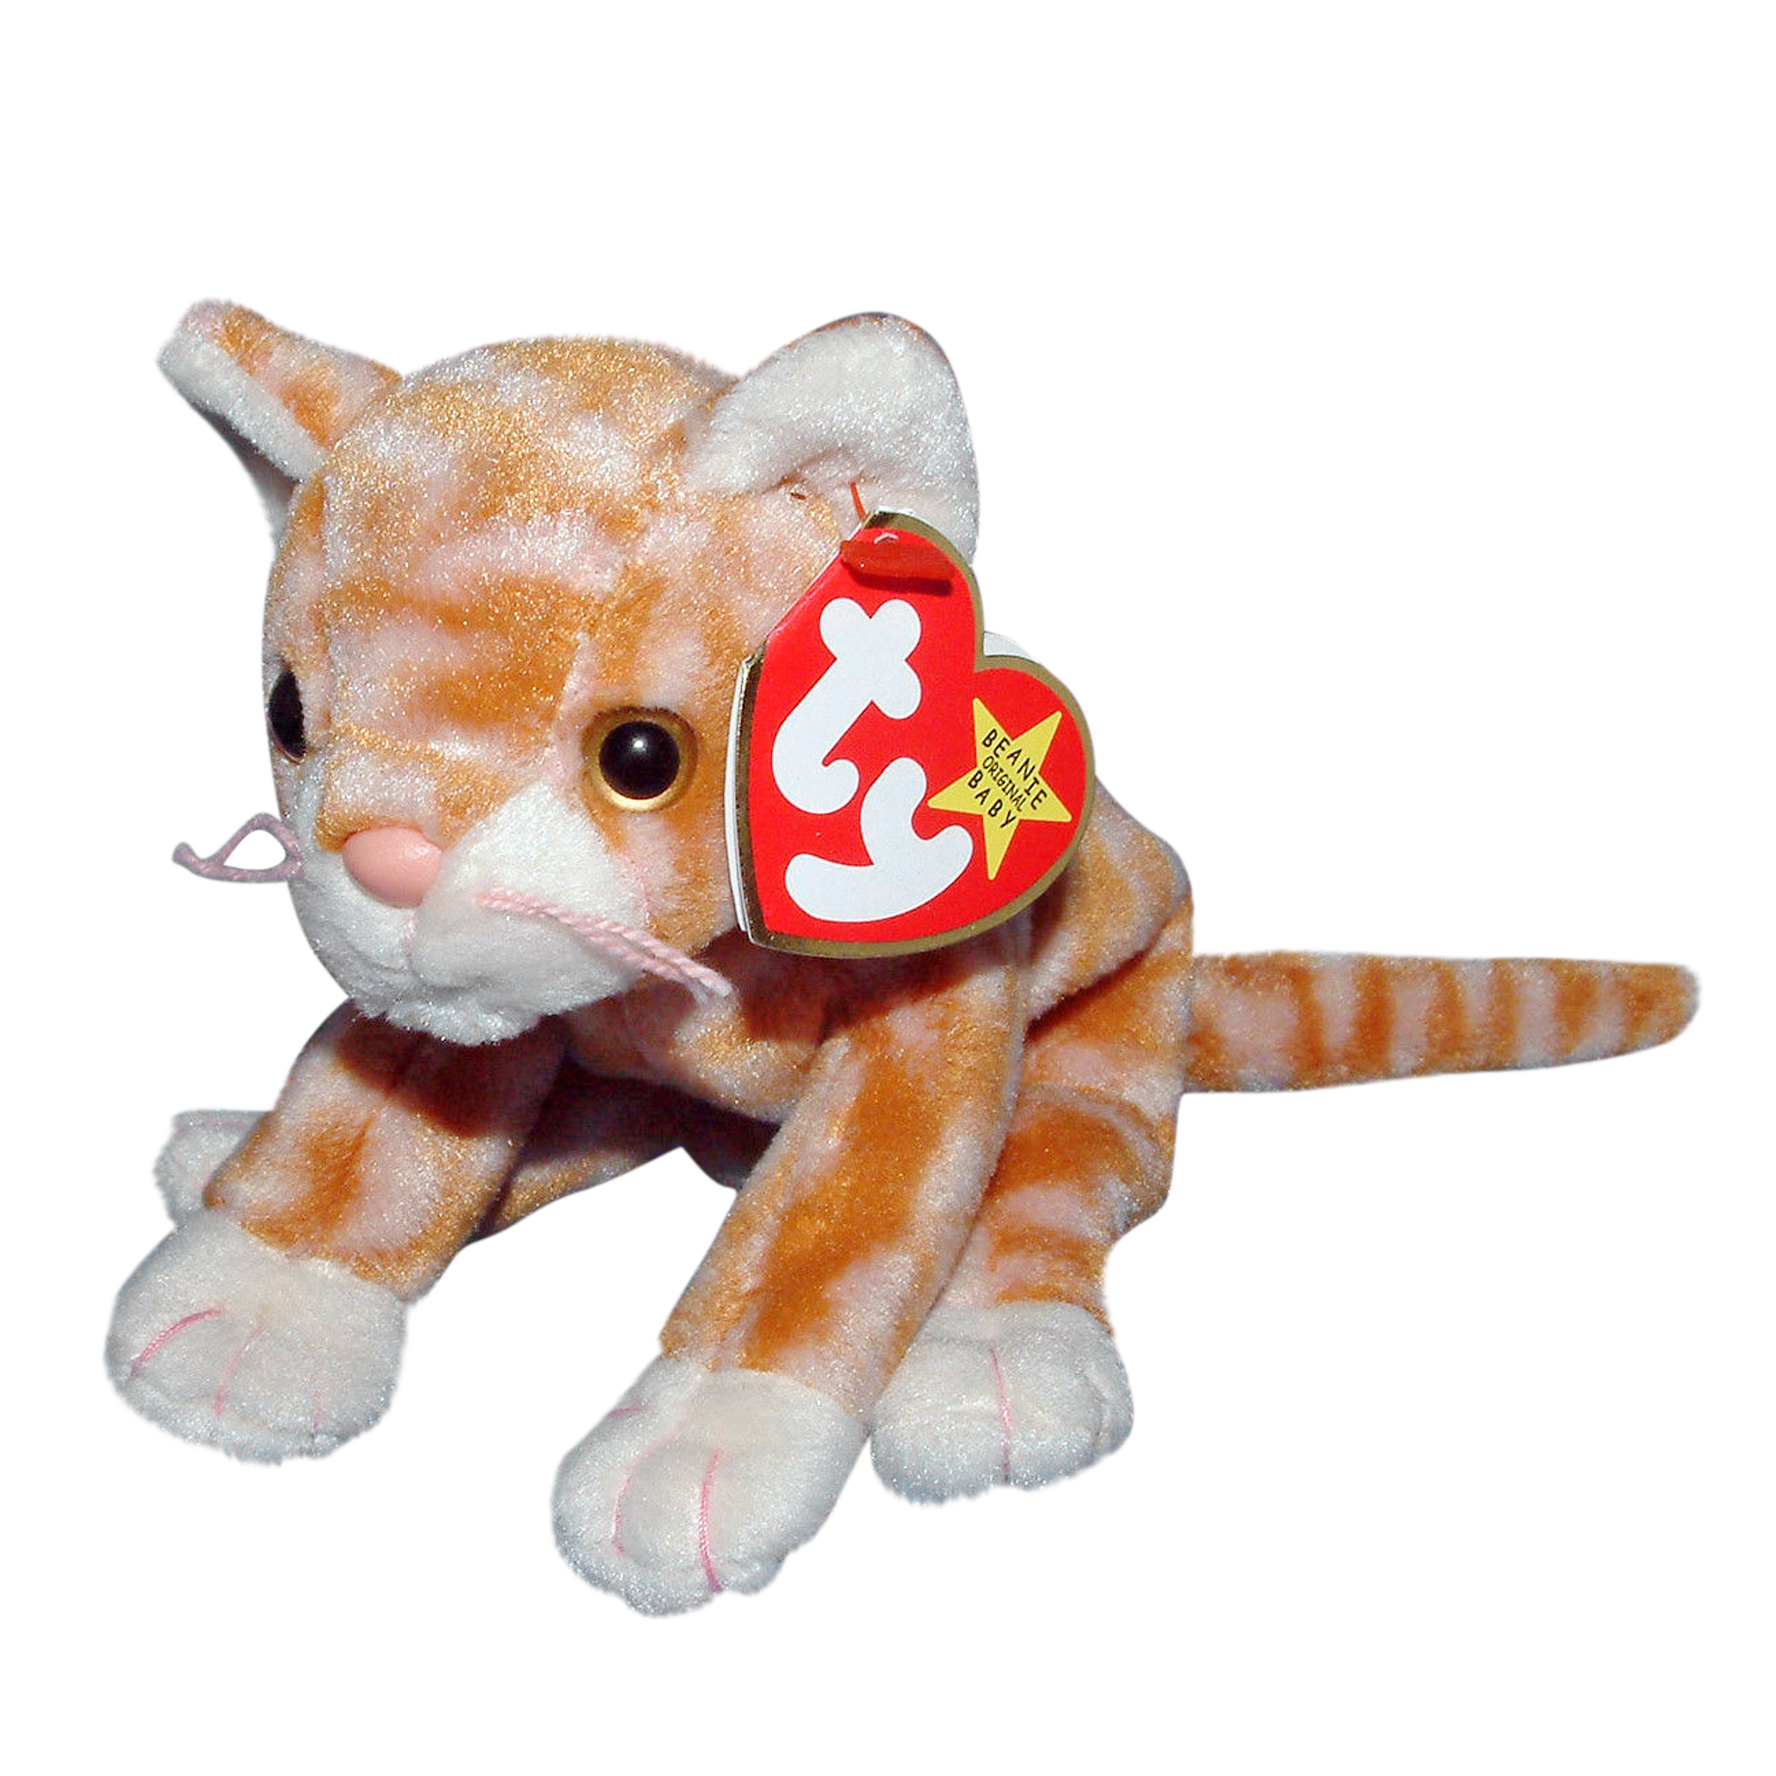 Ty Beanie Baby Amber MWMT, Cat 8421042432 eBay